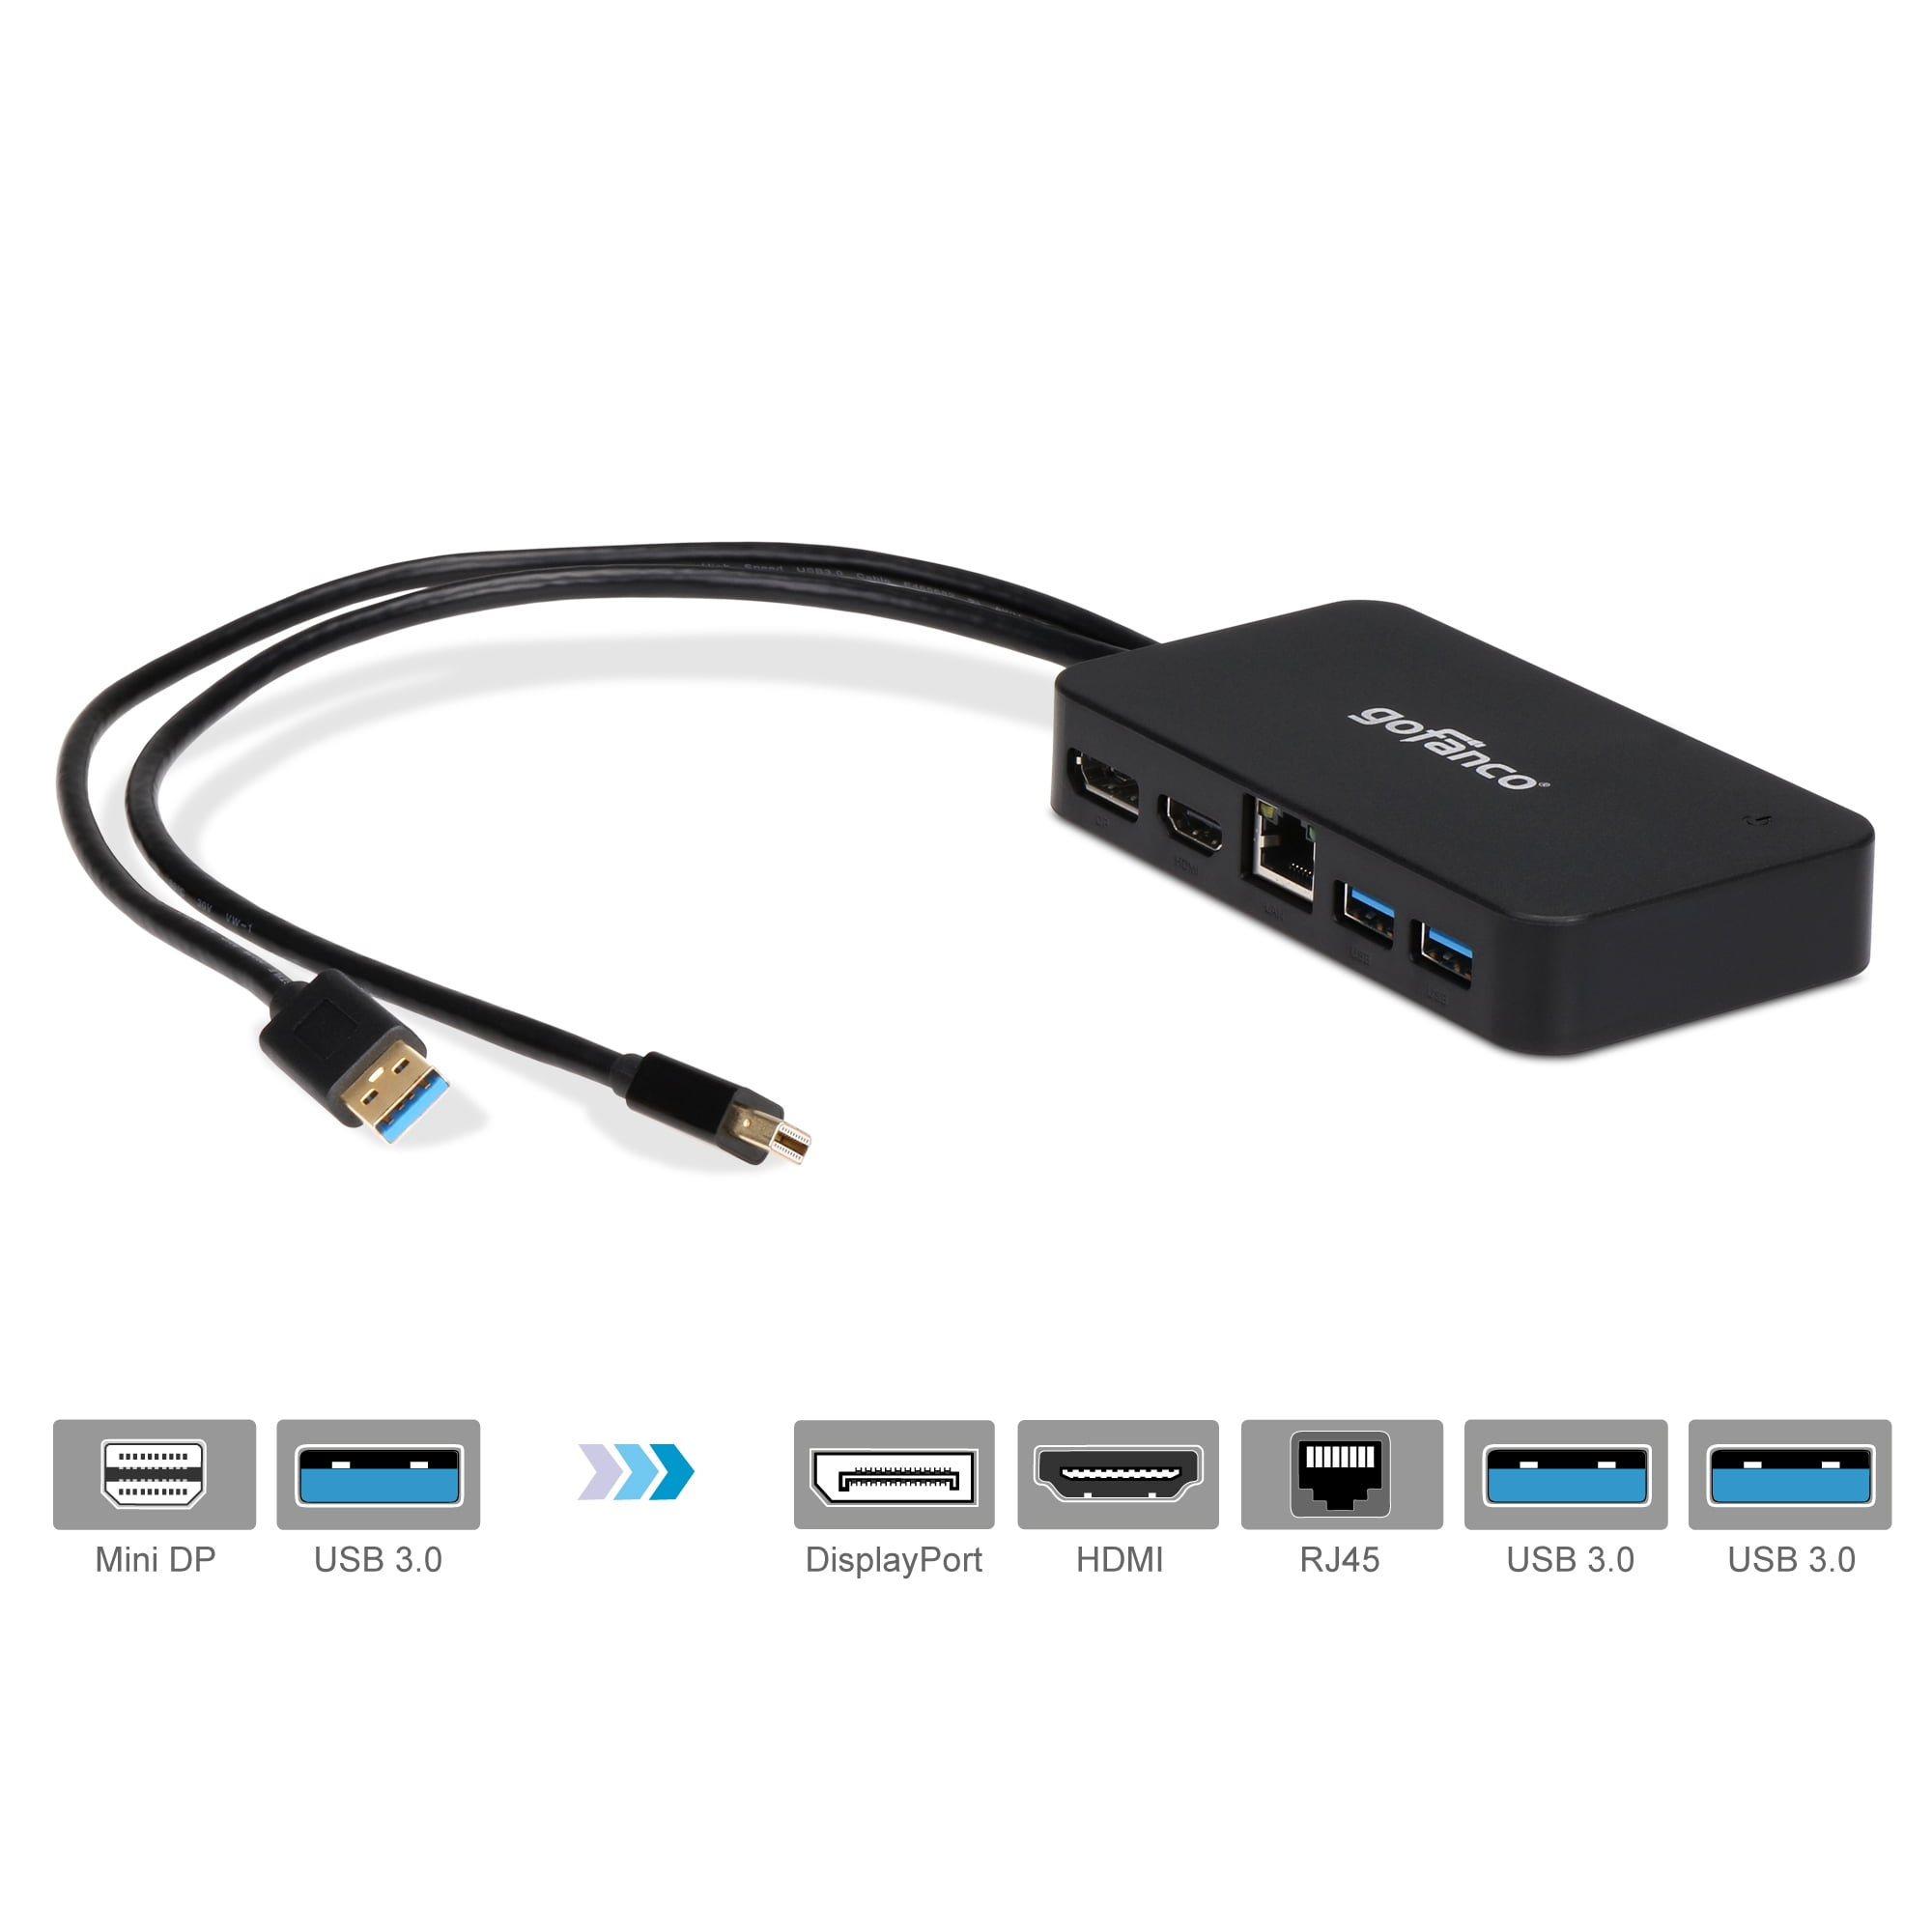 gofanco Mini DisplayPort(Thunderbolt 2) Video with HDMI, DisplayPort, USB 3.0 and Gigabit Ethernet Output for Surface Pro, MacBook and PC - Thunderbolt 2 DP or HDMI Adapter Hub - Walmart.com